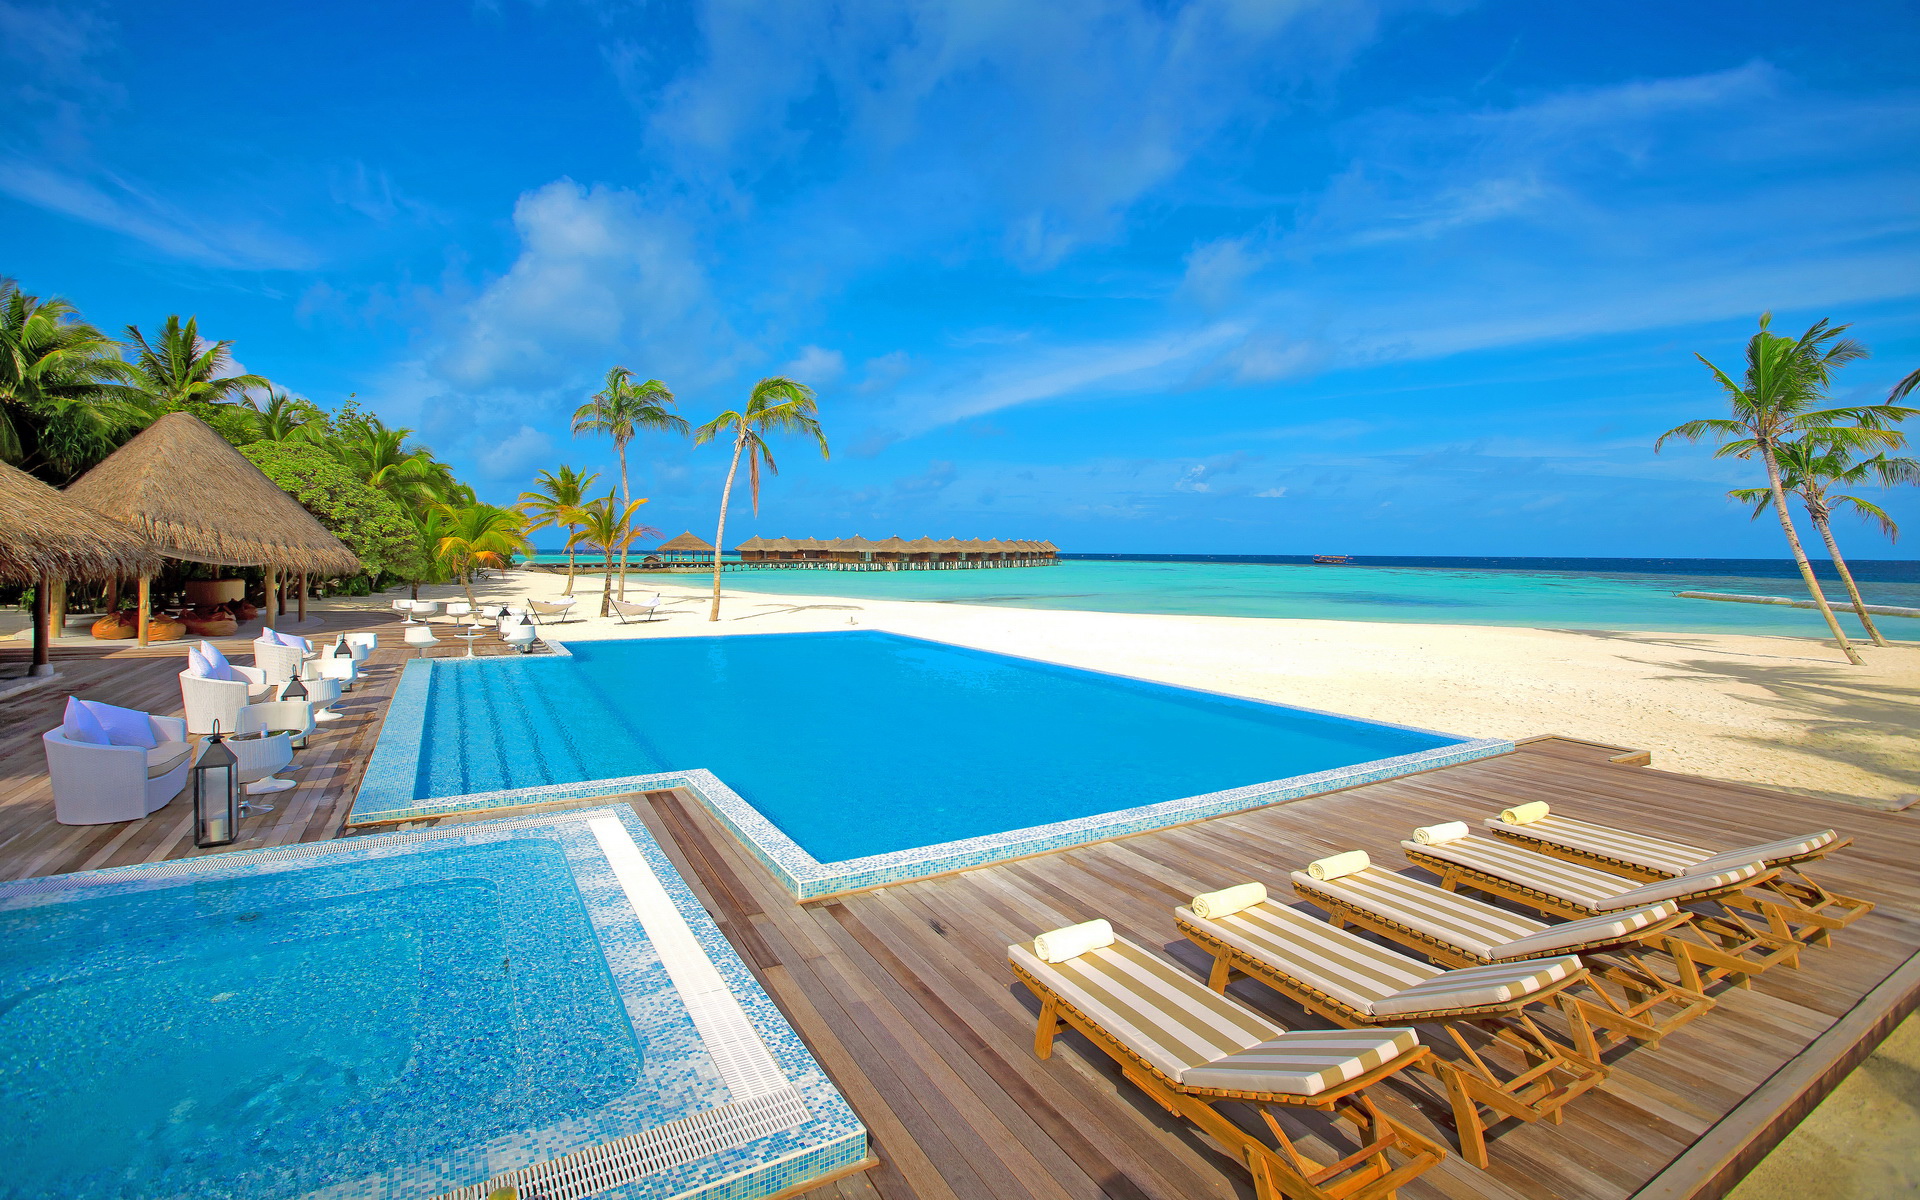 Pool Resort Maldives - Rose Gold Windows Laptop , HD Wallpaper & Backgrounds